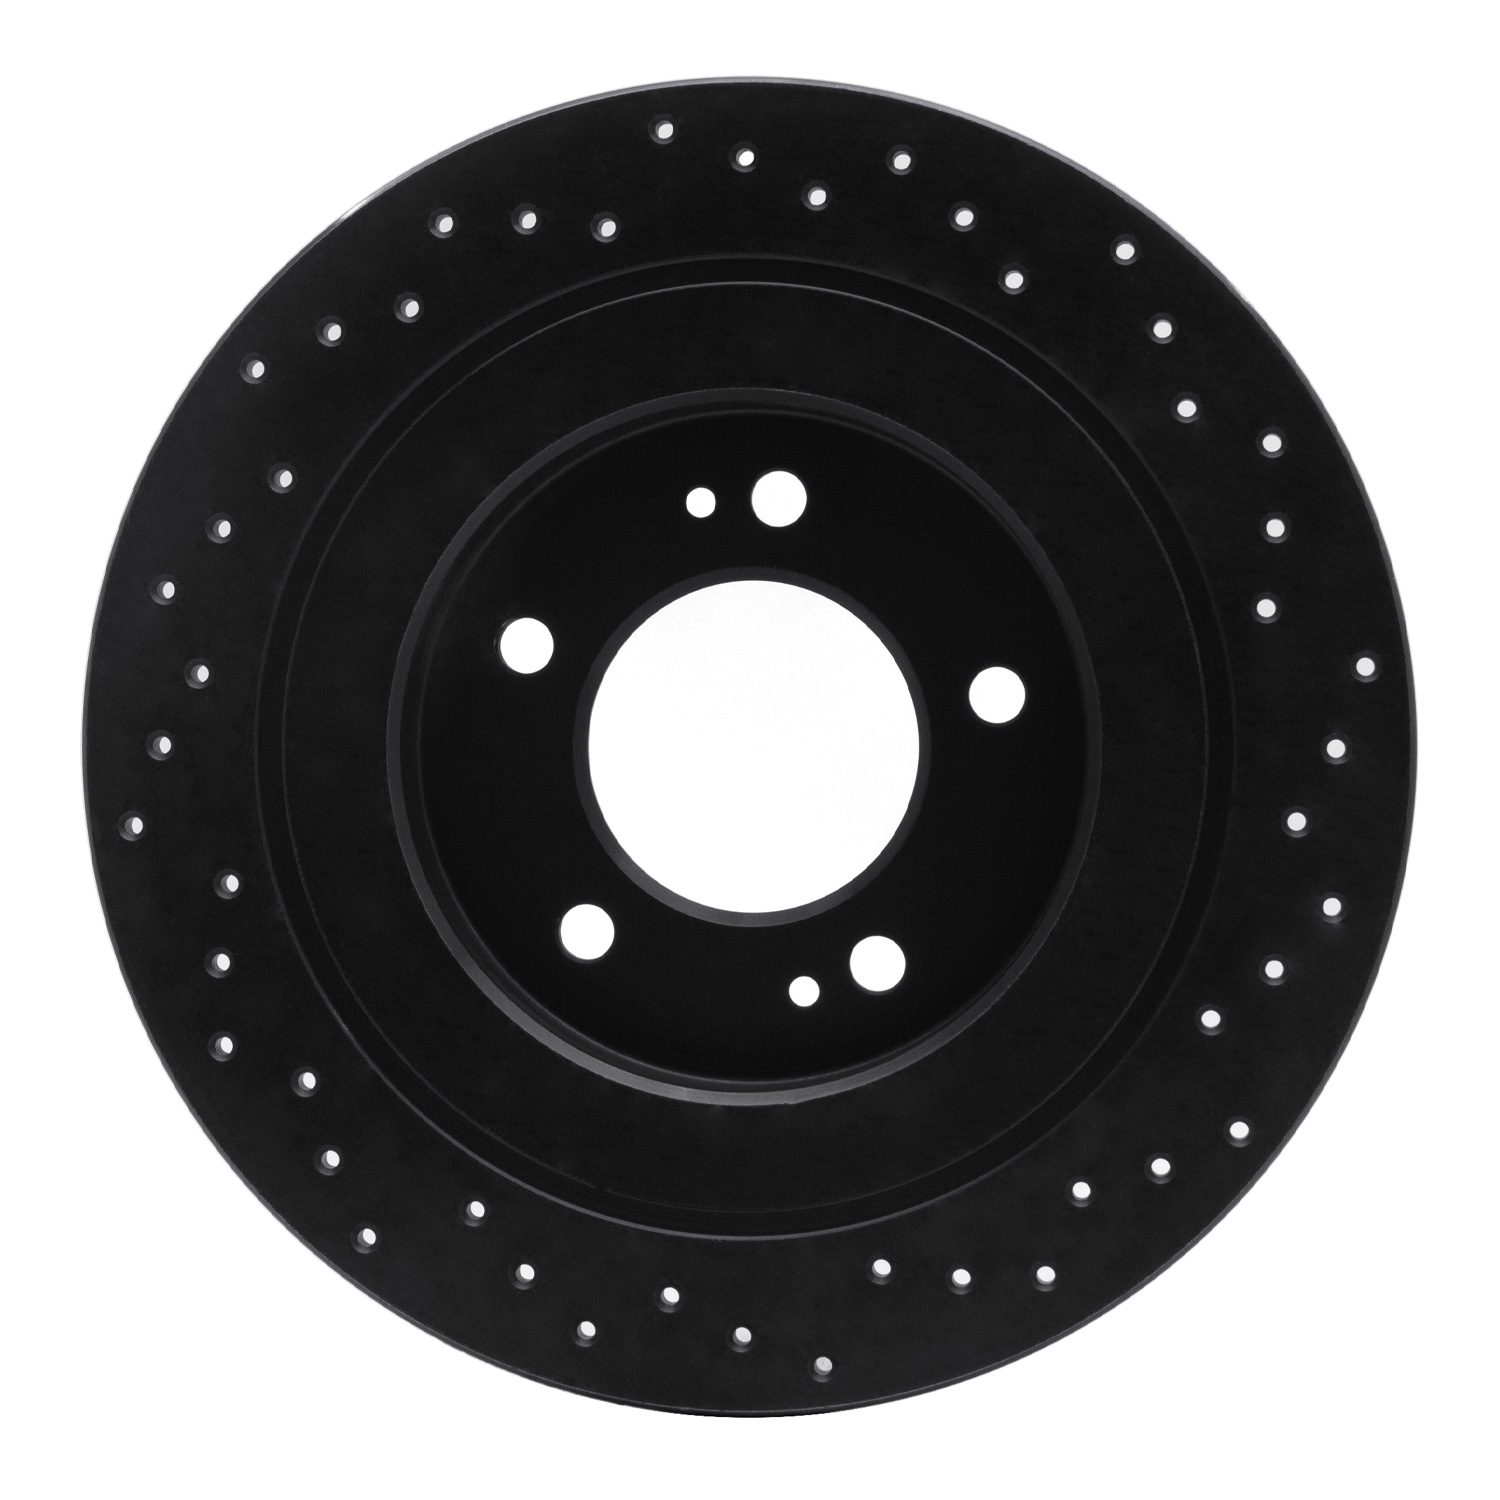 Drilled Brake Rotor [Black], Fits Select Kia/Hyundai/Genesis